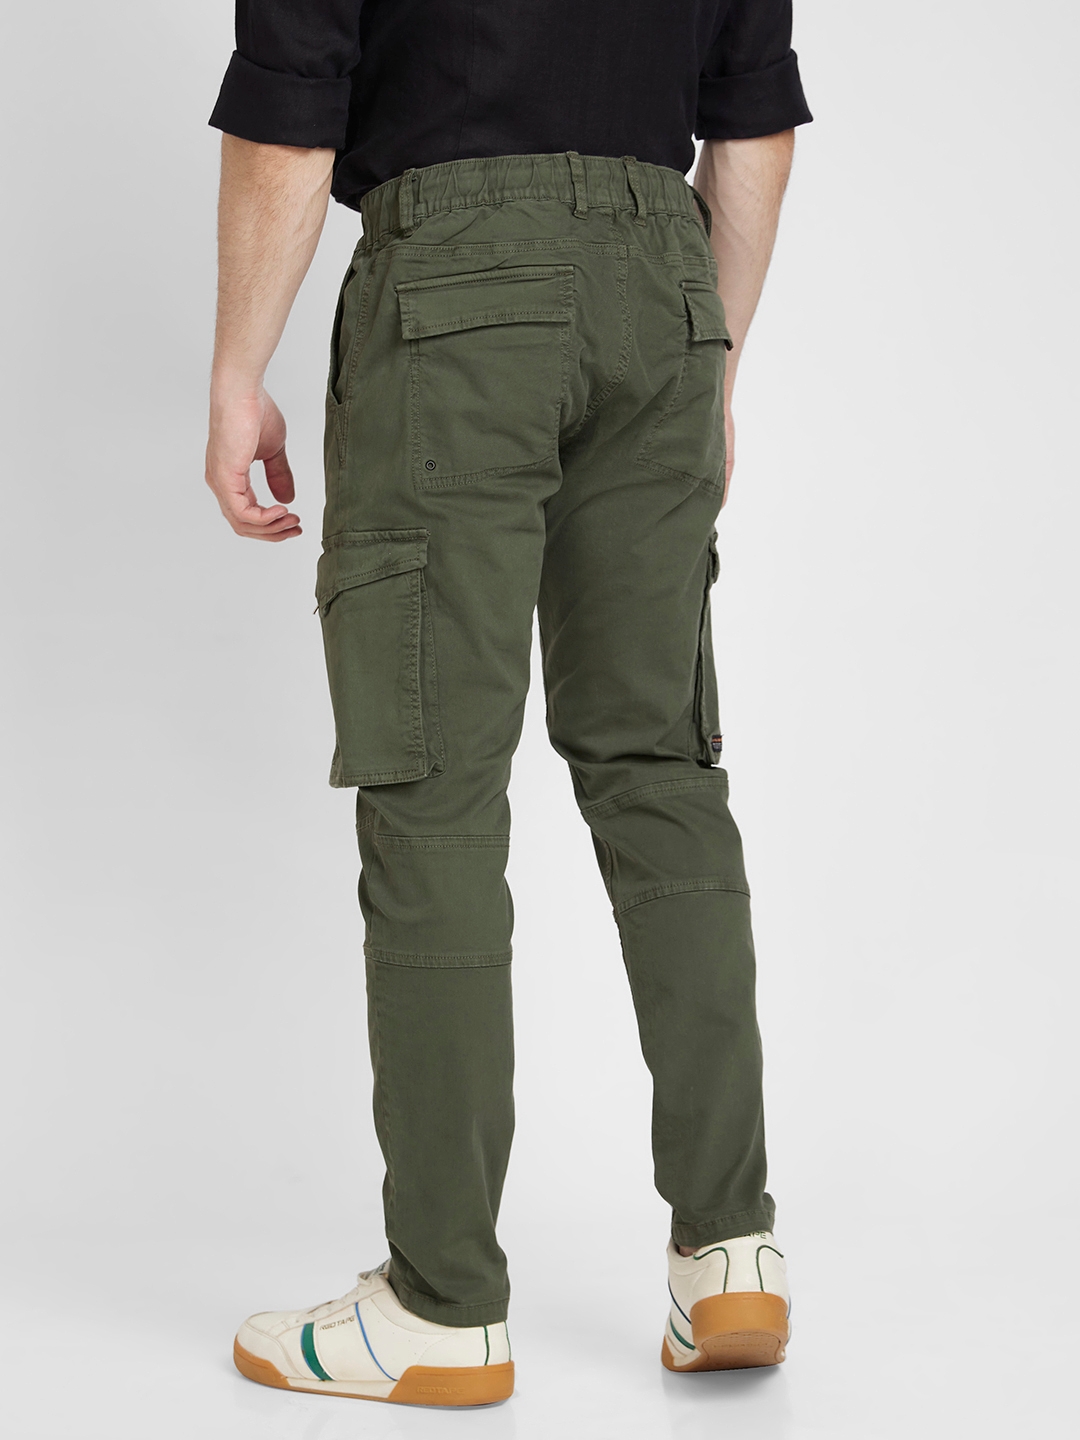 Buy GreyOlive Green Color Cargo Trouser Pant for Men 30 at Amazonin